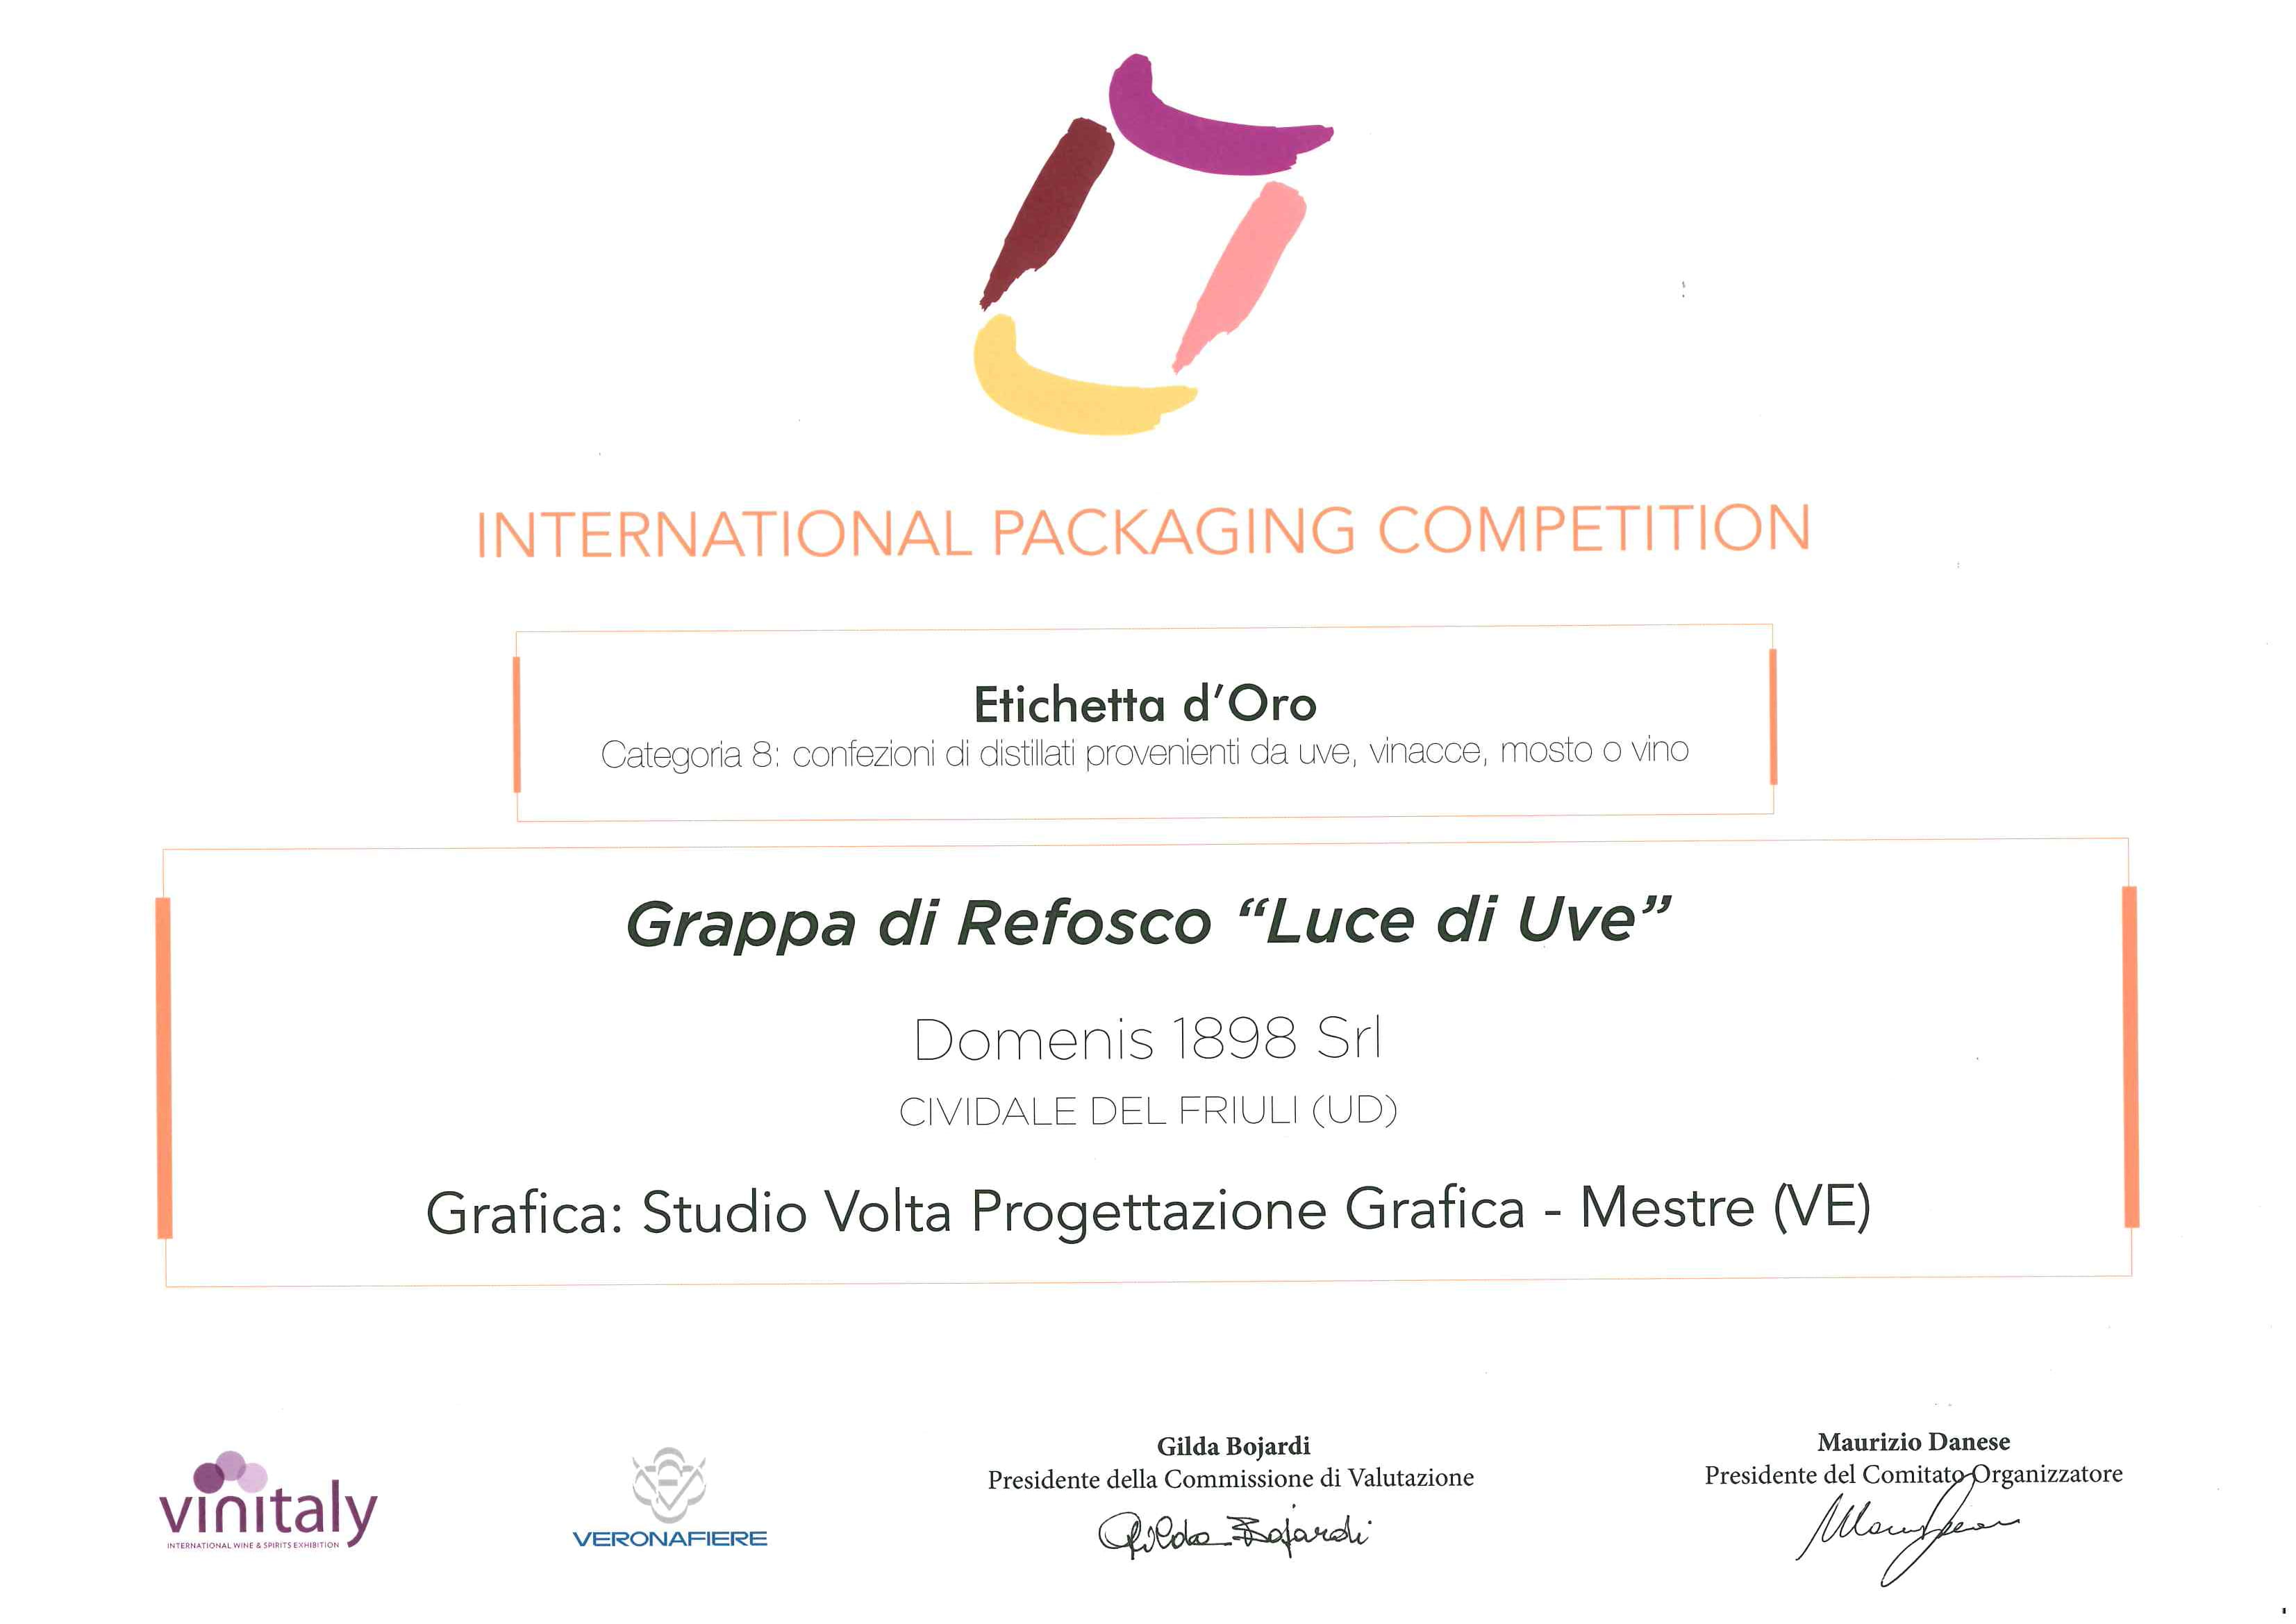 International Packaging Competition – Diploma di Etichetta d’Oro